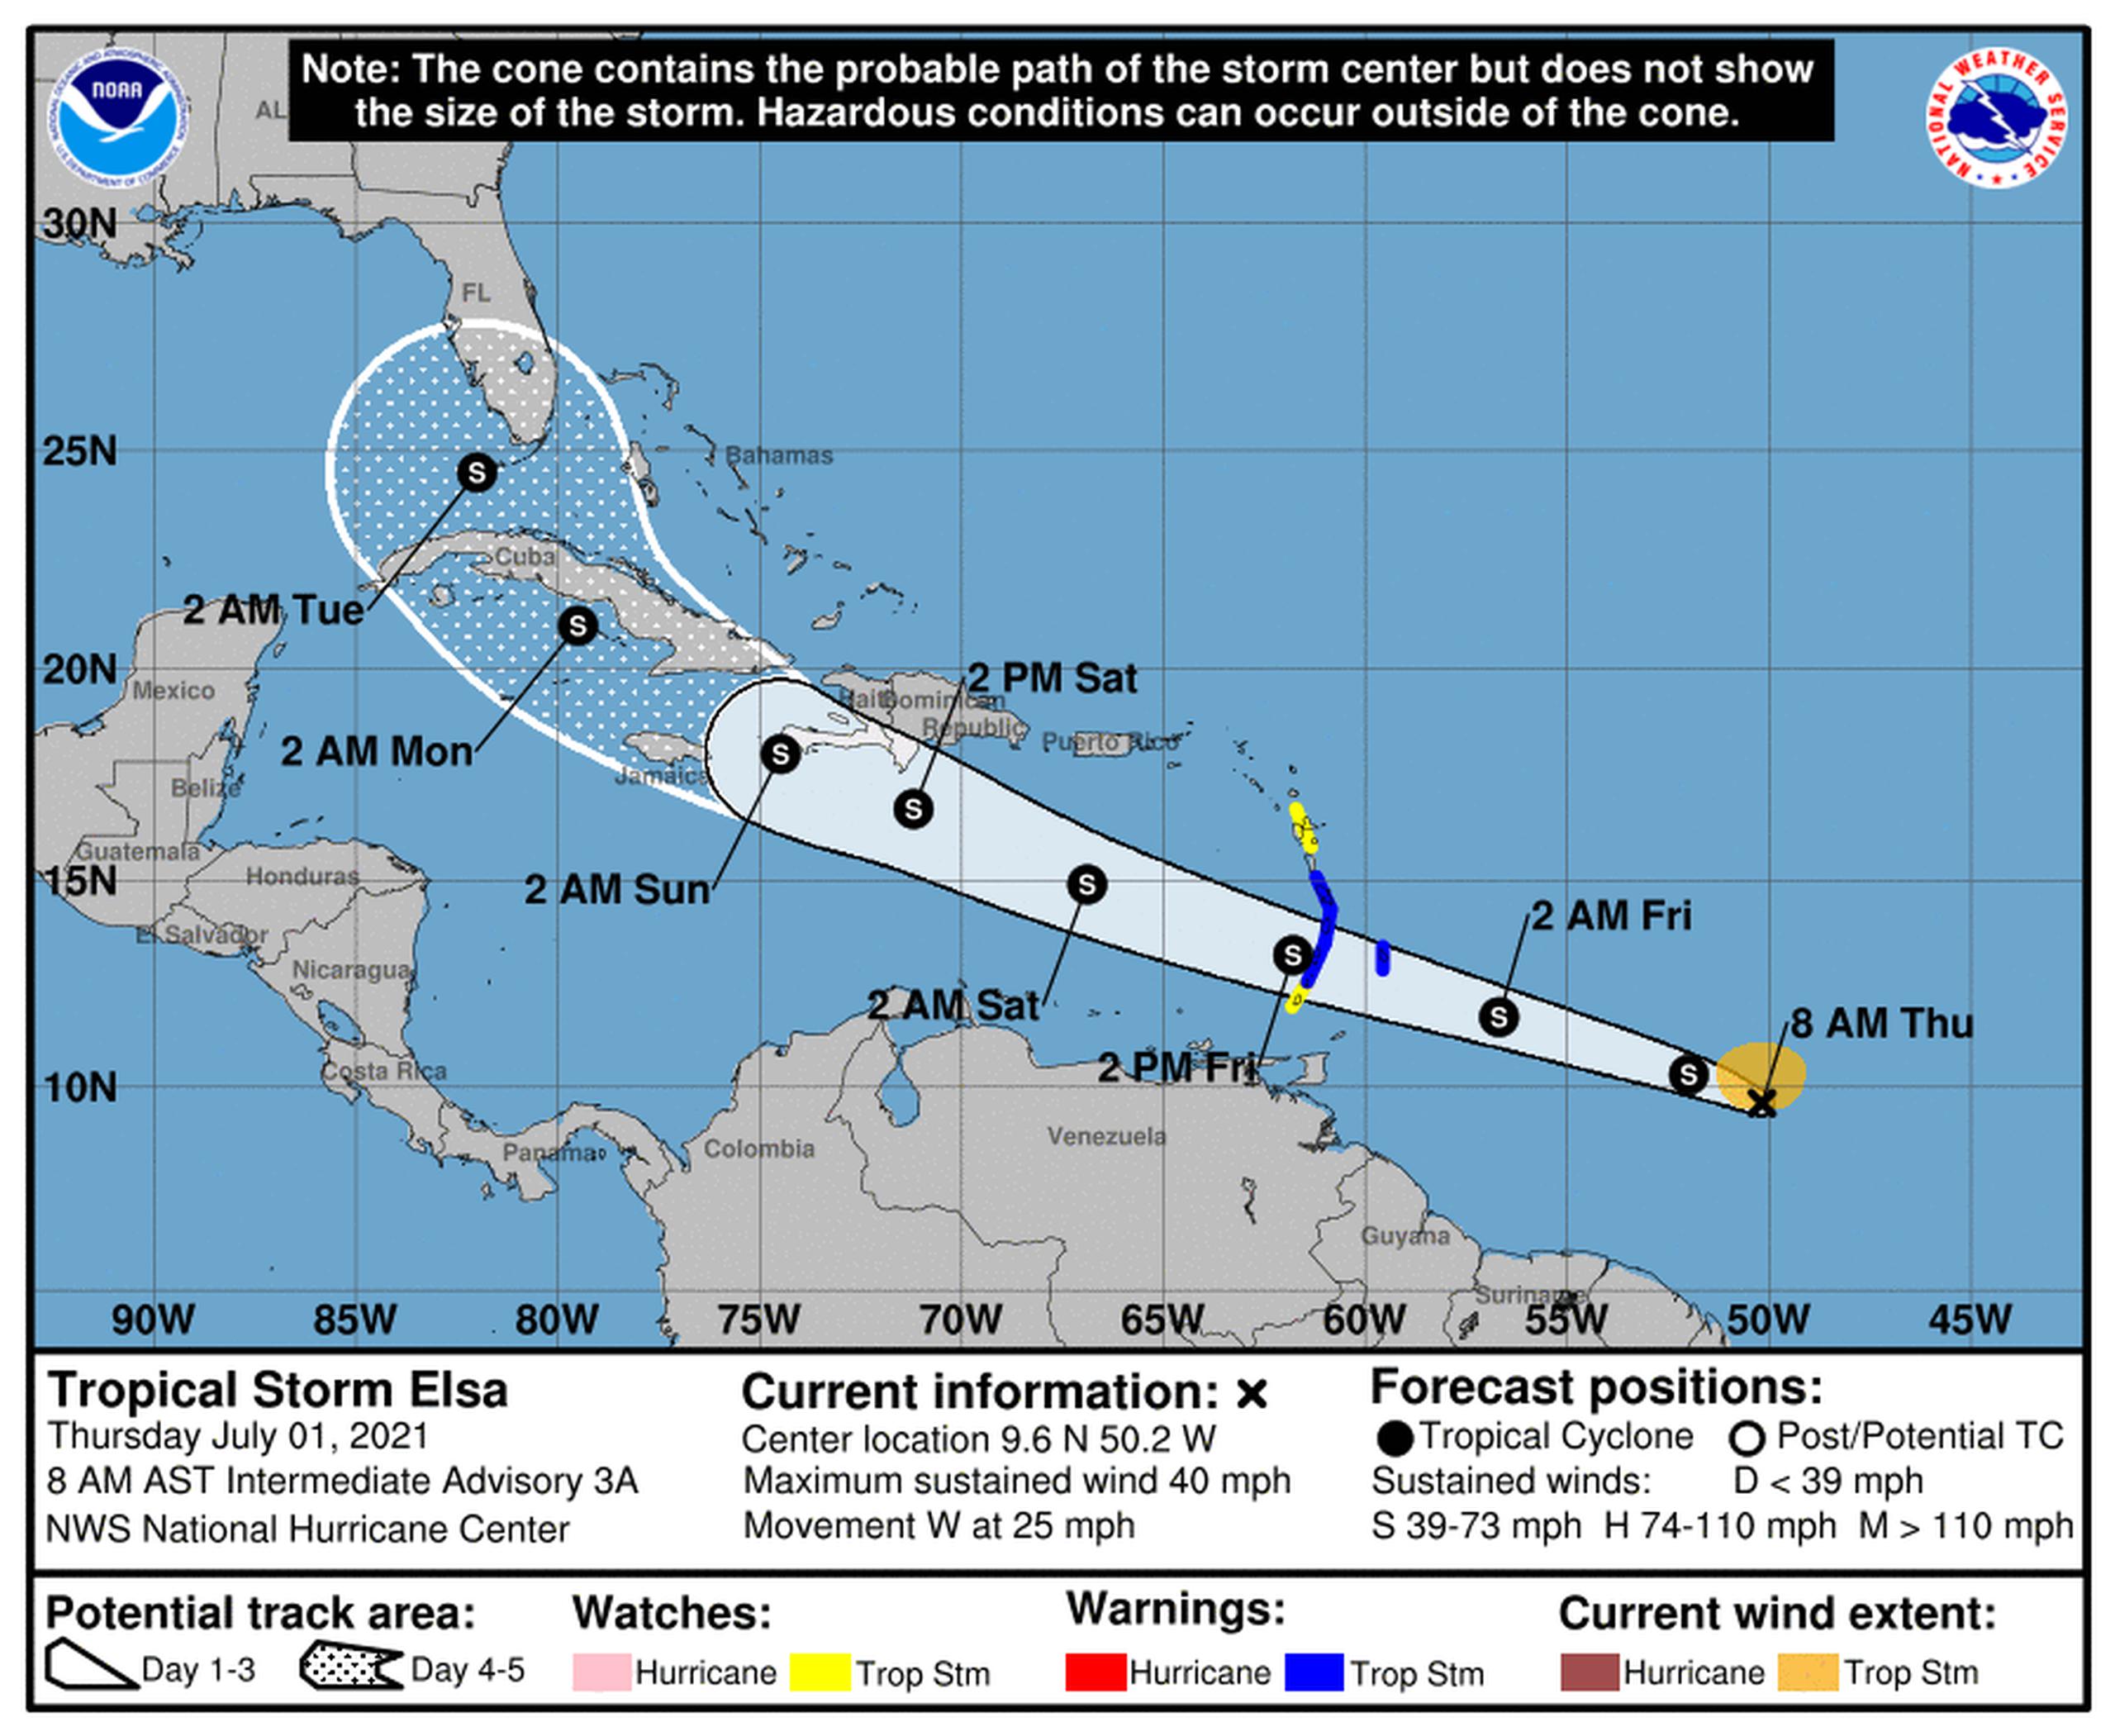 Pronóstico de la tormenta tropical Elsa emitido por el Centro Nacional de Huracanes a las 8:00 de la mañana el 1 de julio de 2021.